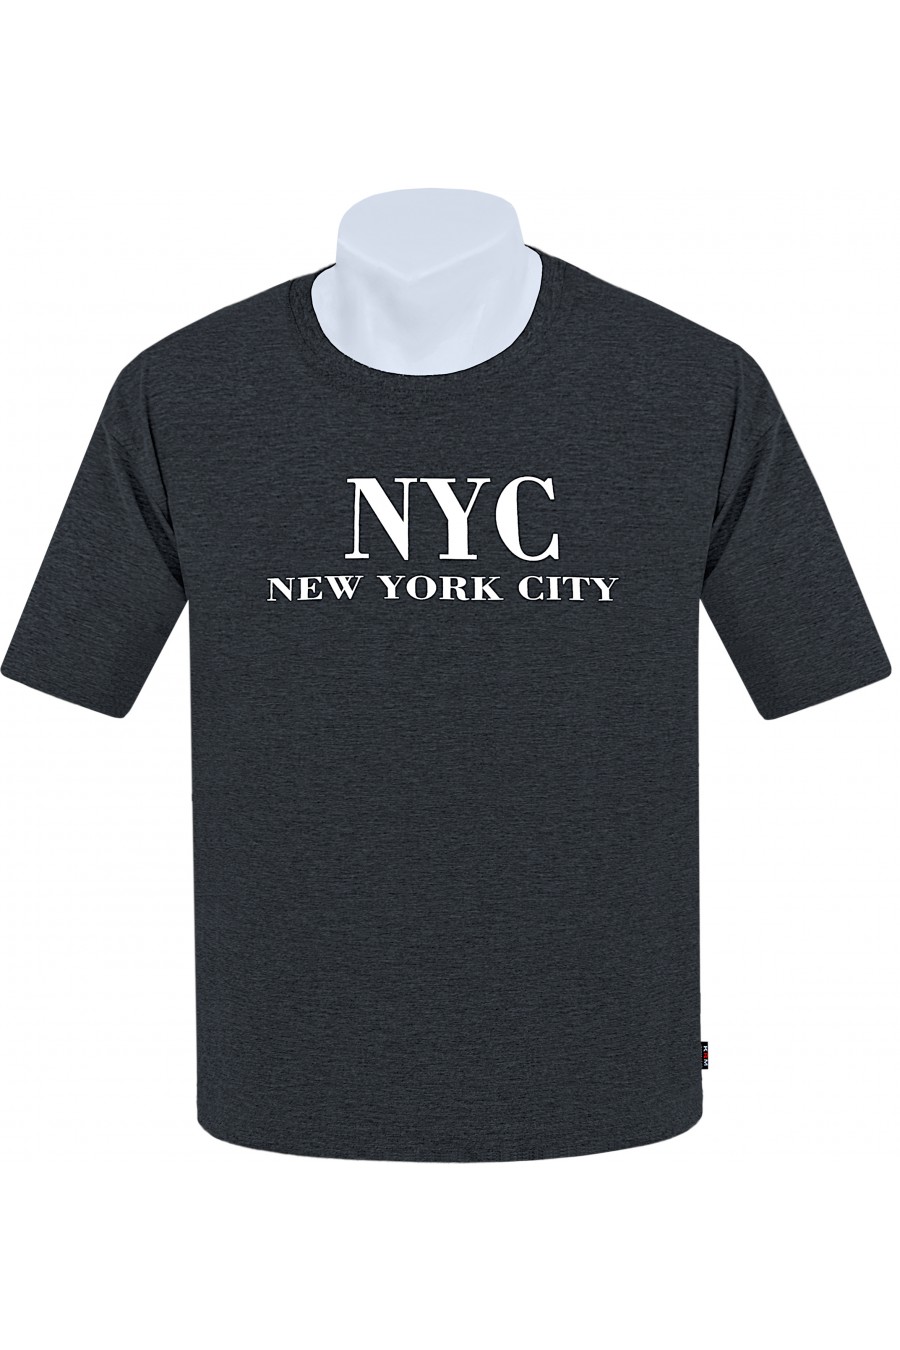 Koszulka NEW YORK CITY M-8XL bawełna antracyt